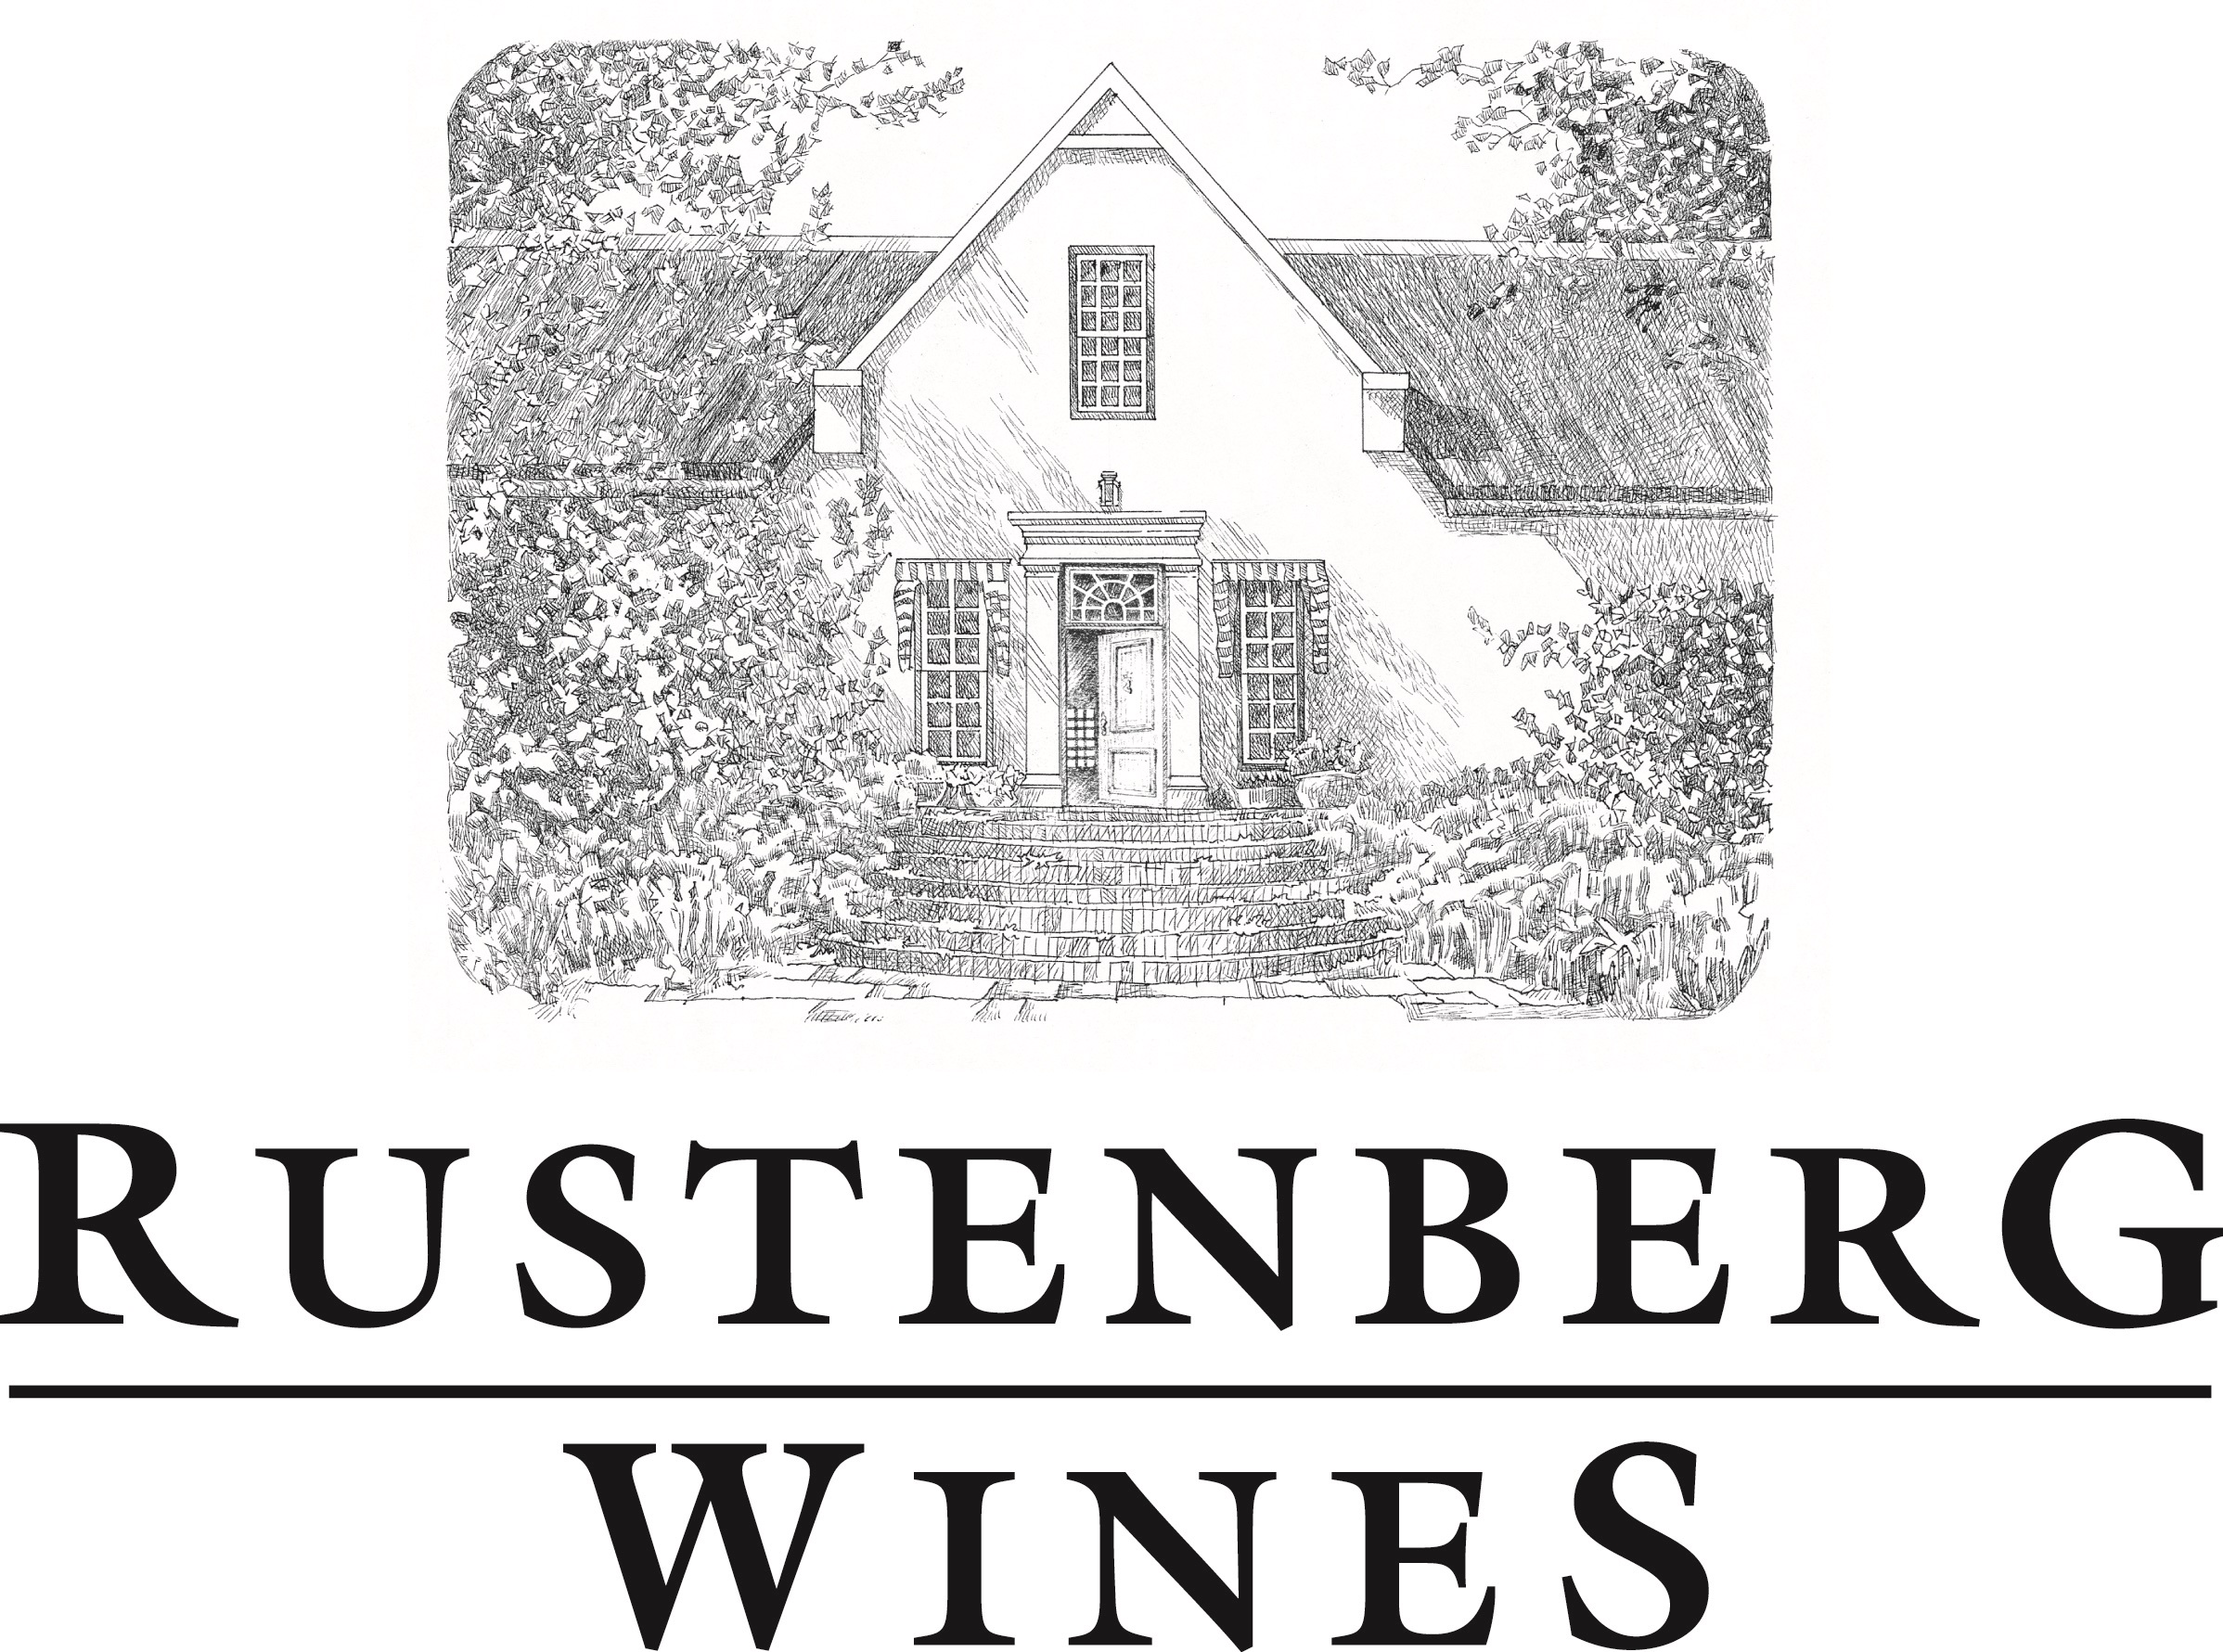 Rustenberg Wines